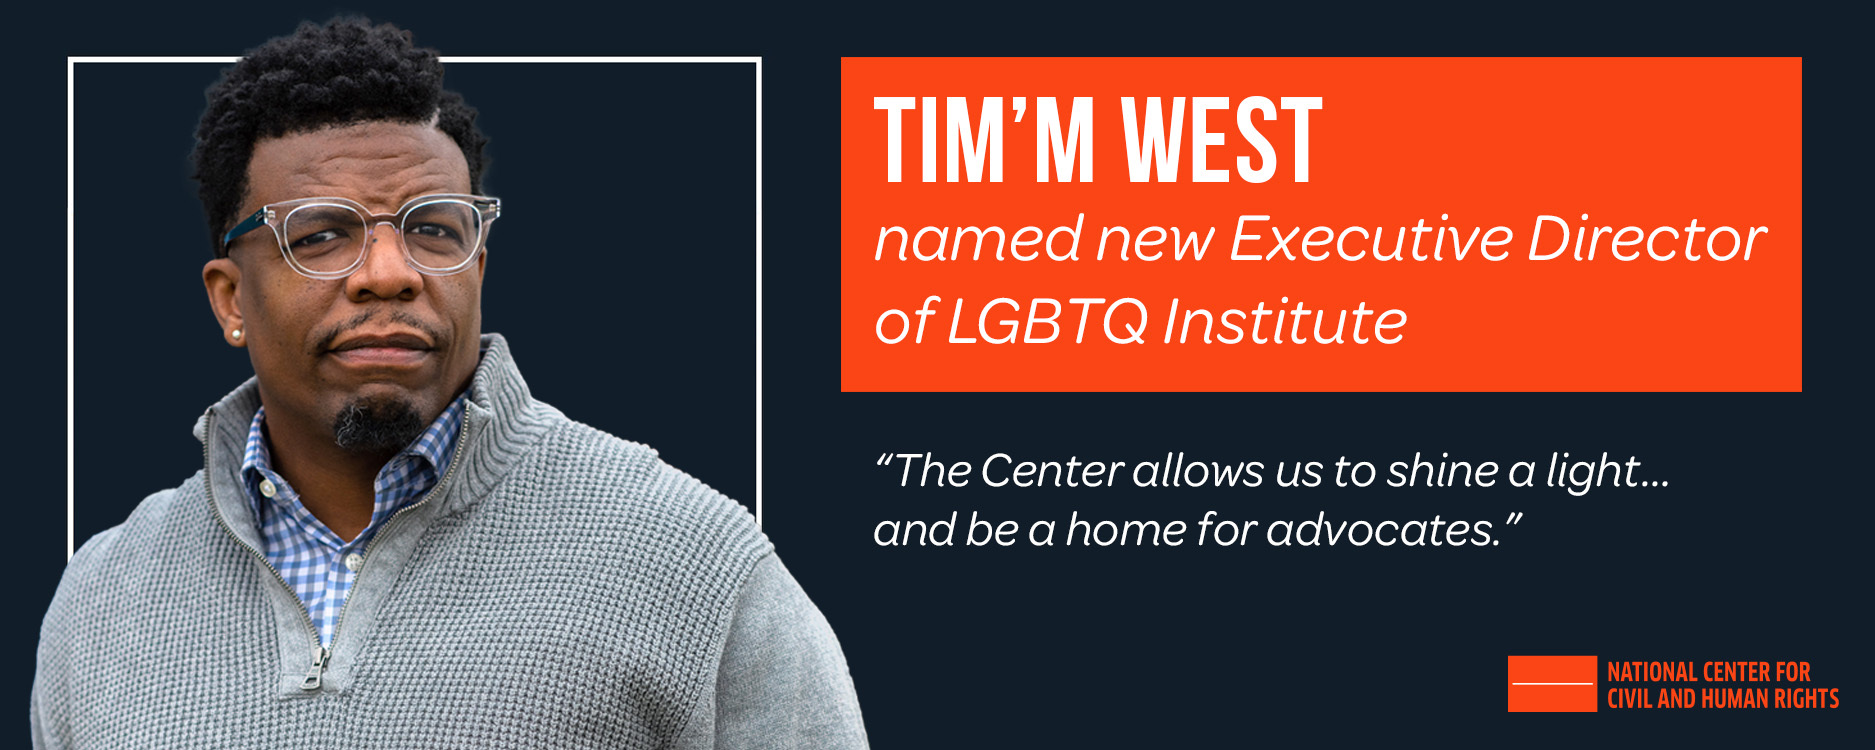 Timm West announce web header v223